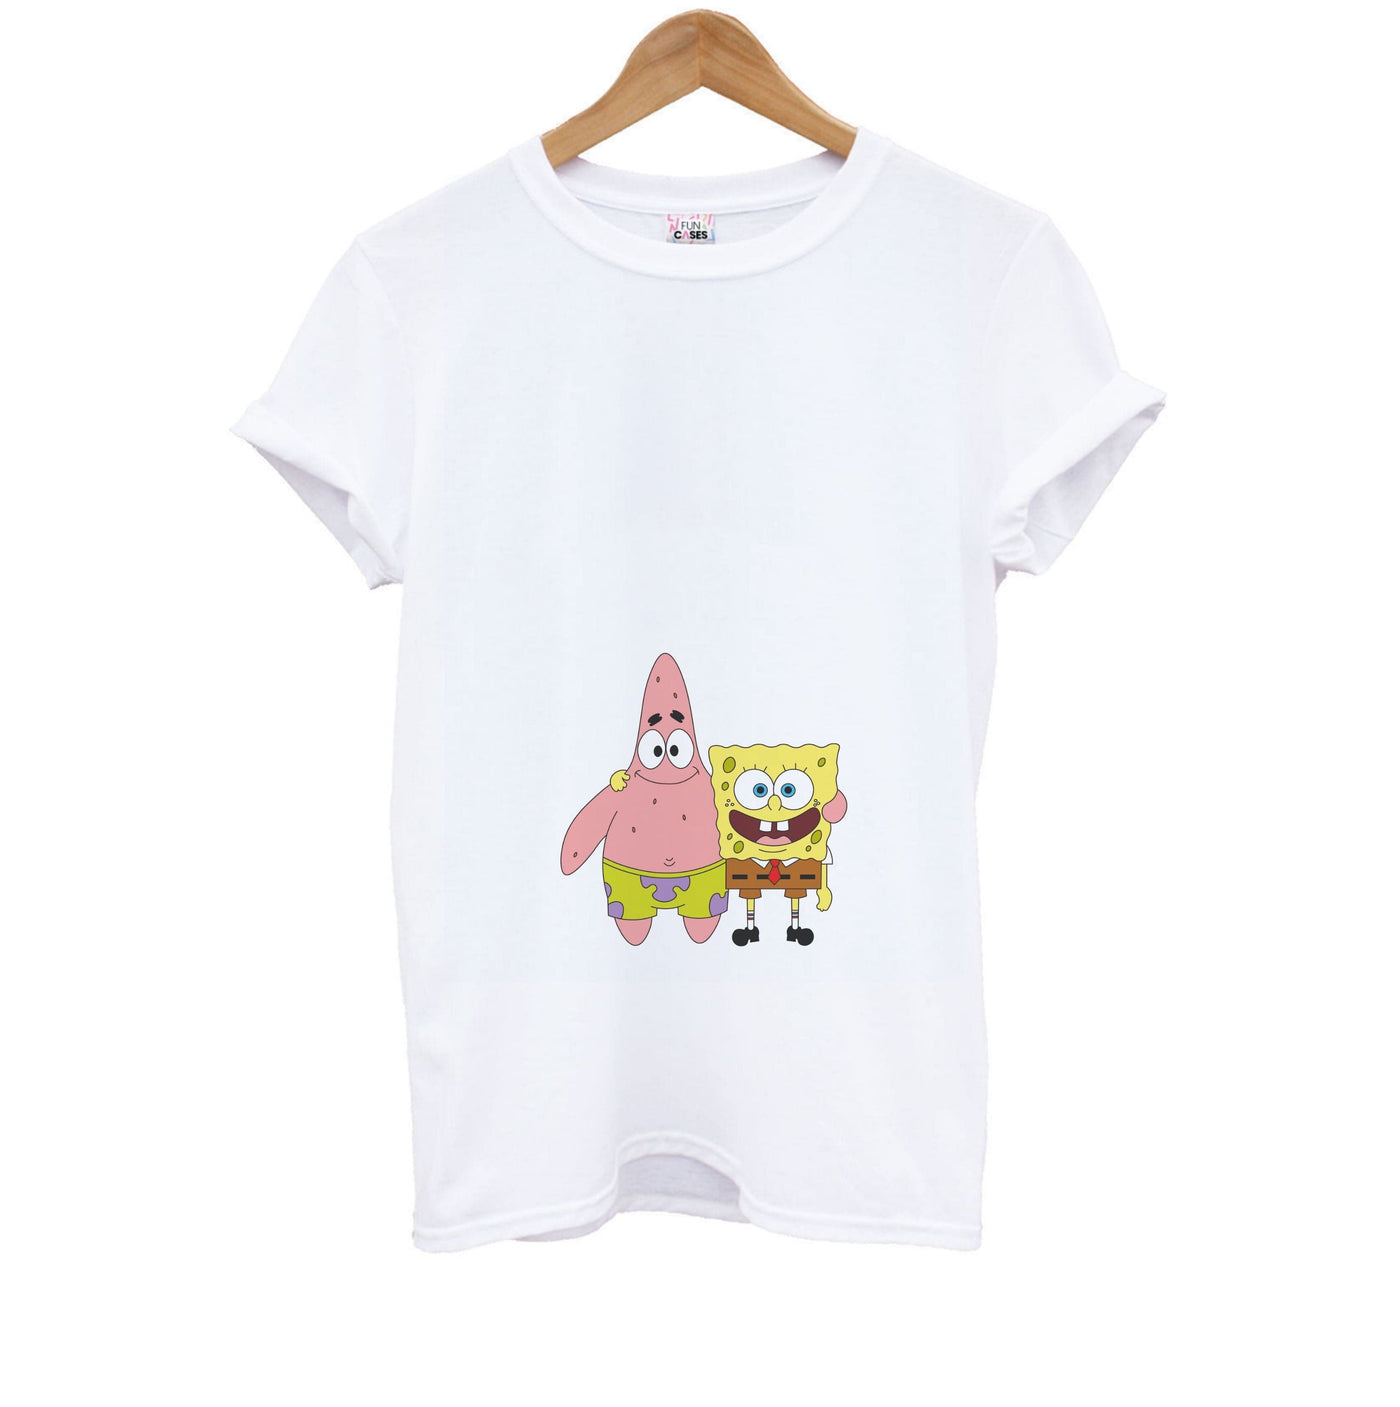 Patrick And Spongebob  Kids T-Shirt